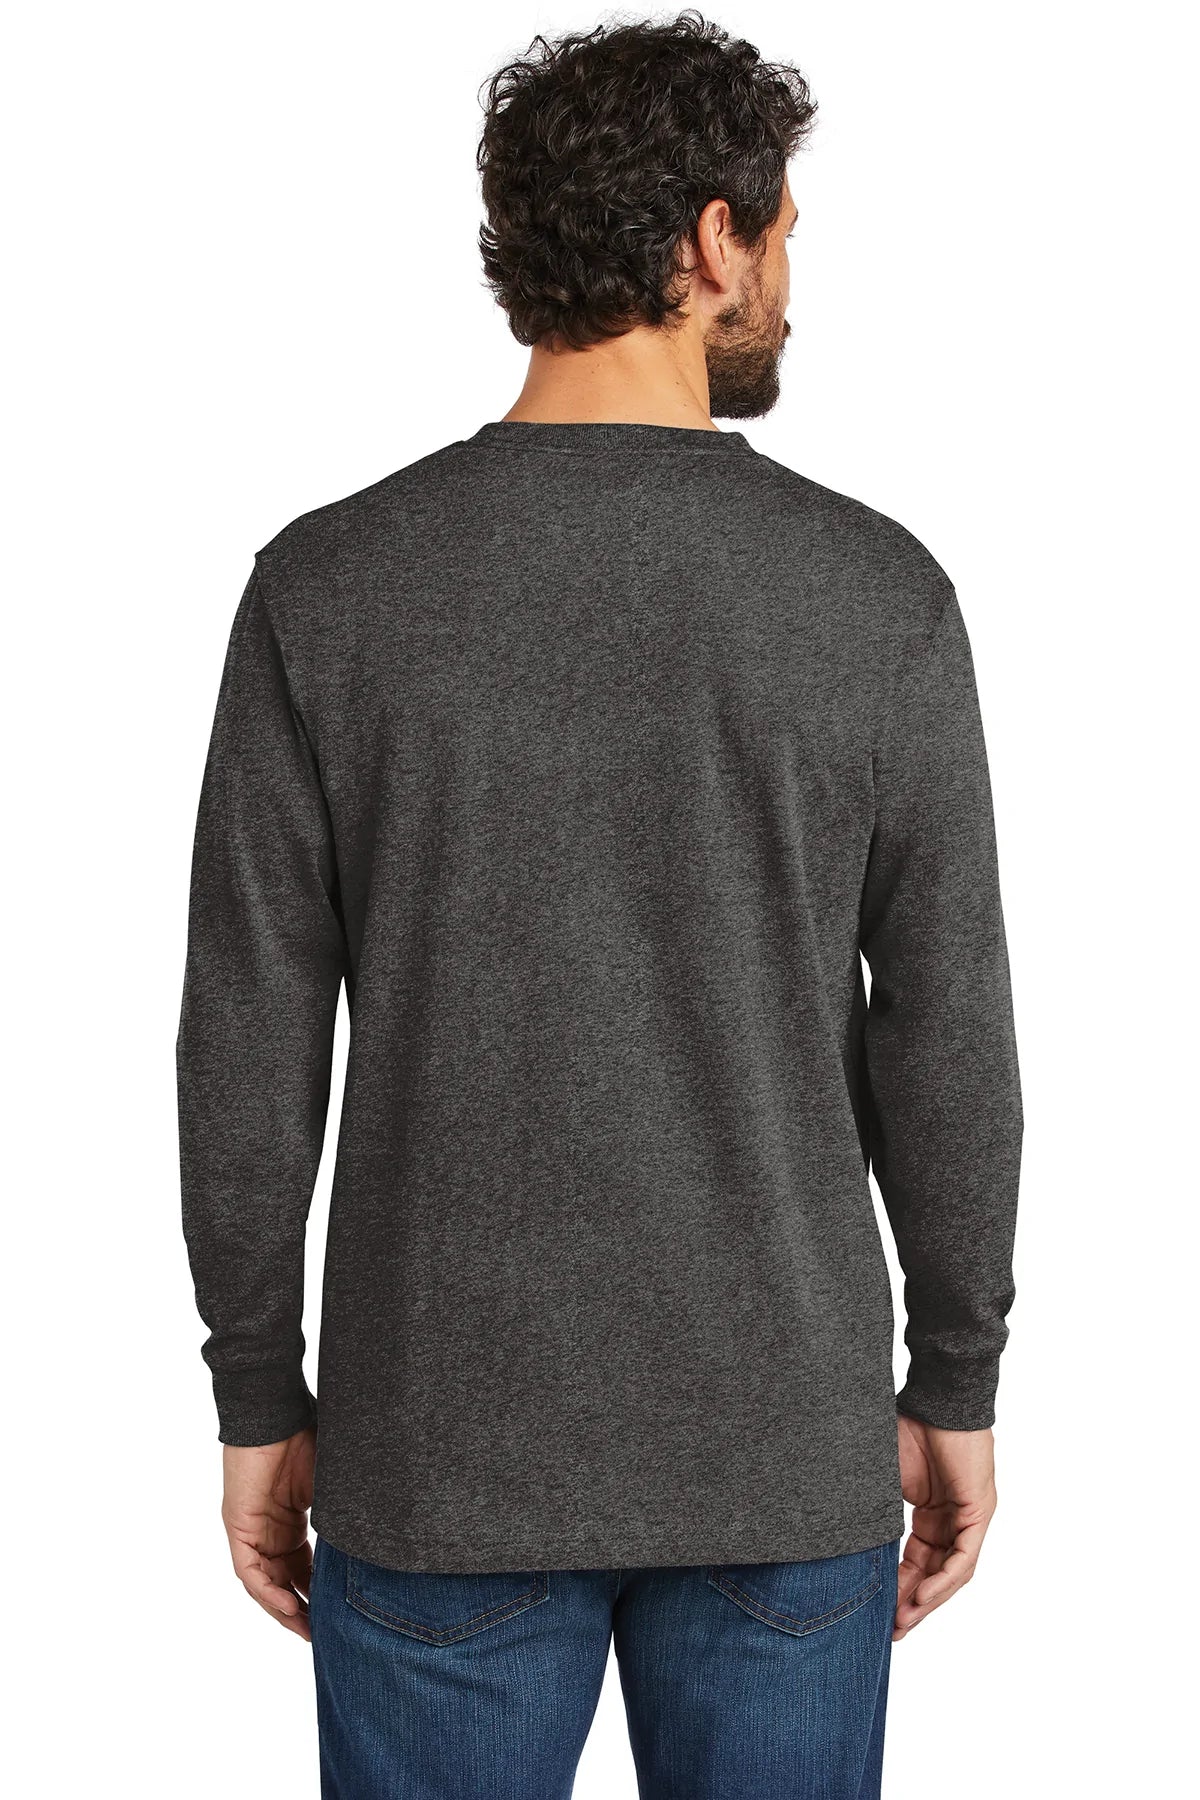 carhartt workwear pocket long sleeve t-shirt ctk126 carbon heather